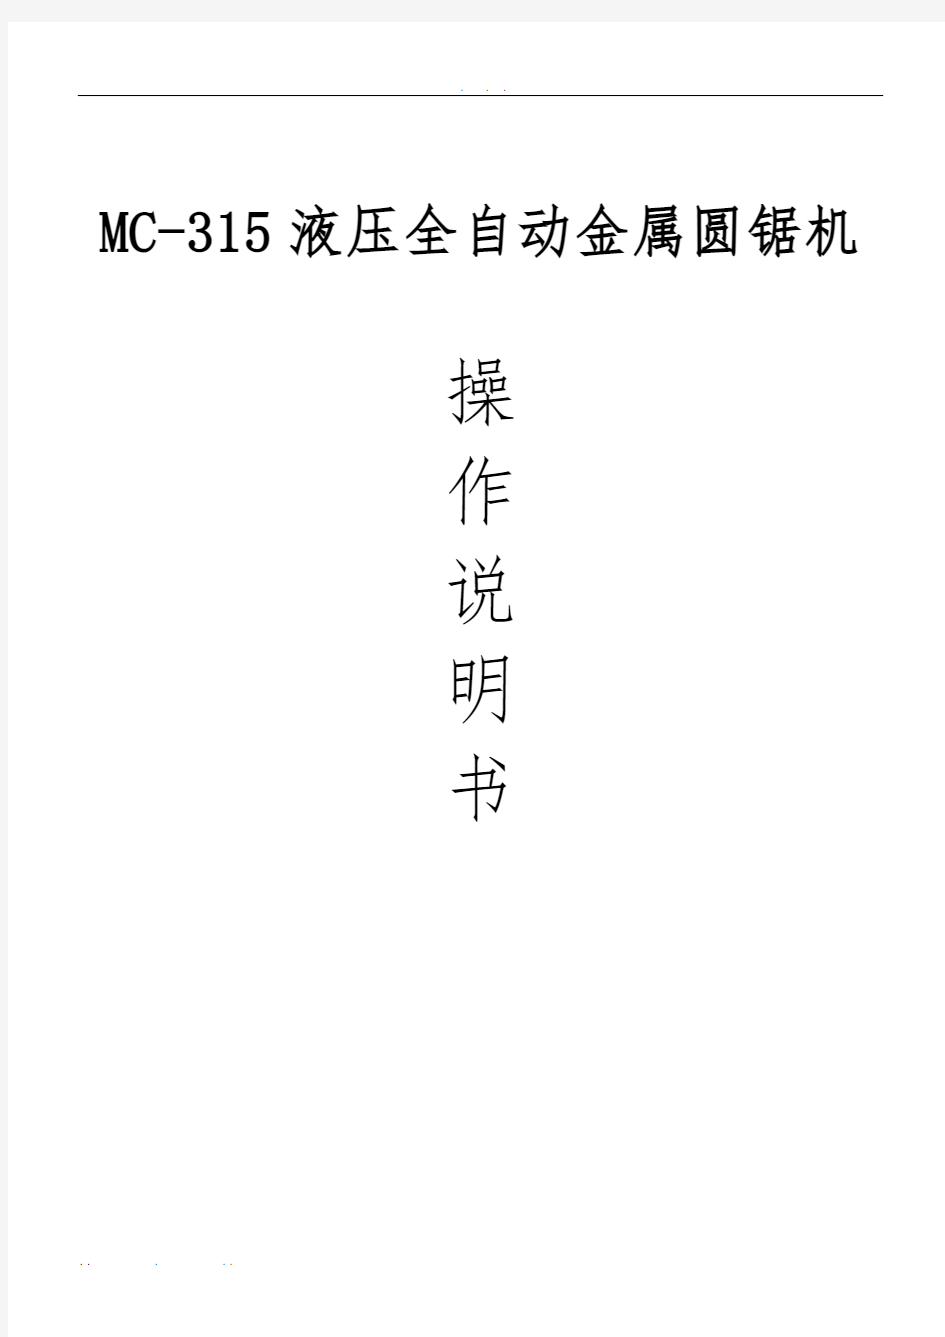 MC-315油压金属圆锯机说明书